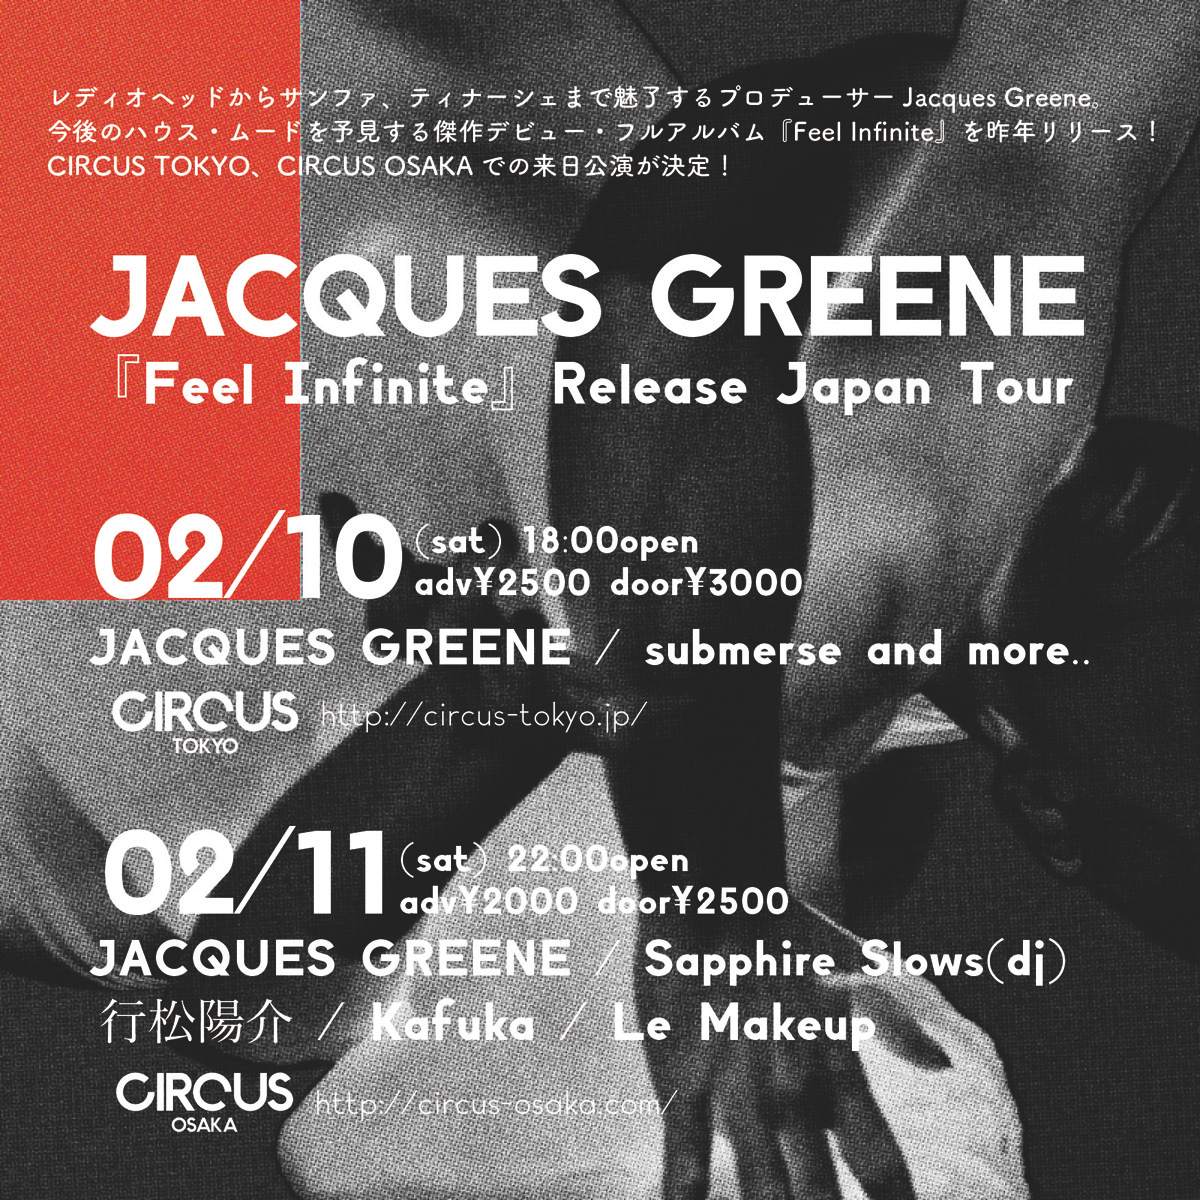 Jacques Greeneのアルバムリリースパーティーが東京と大阪で開催 image